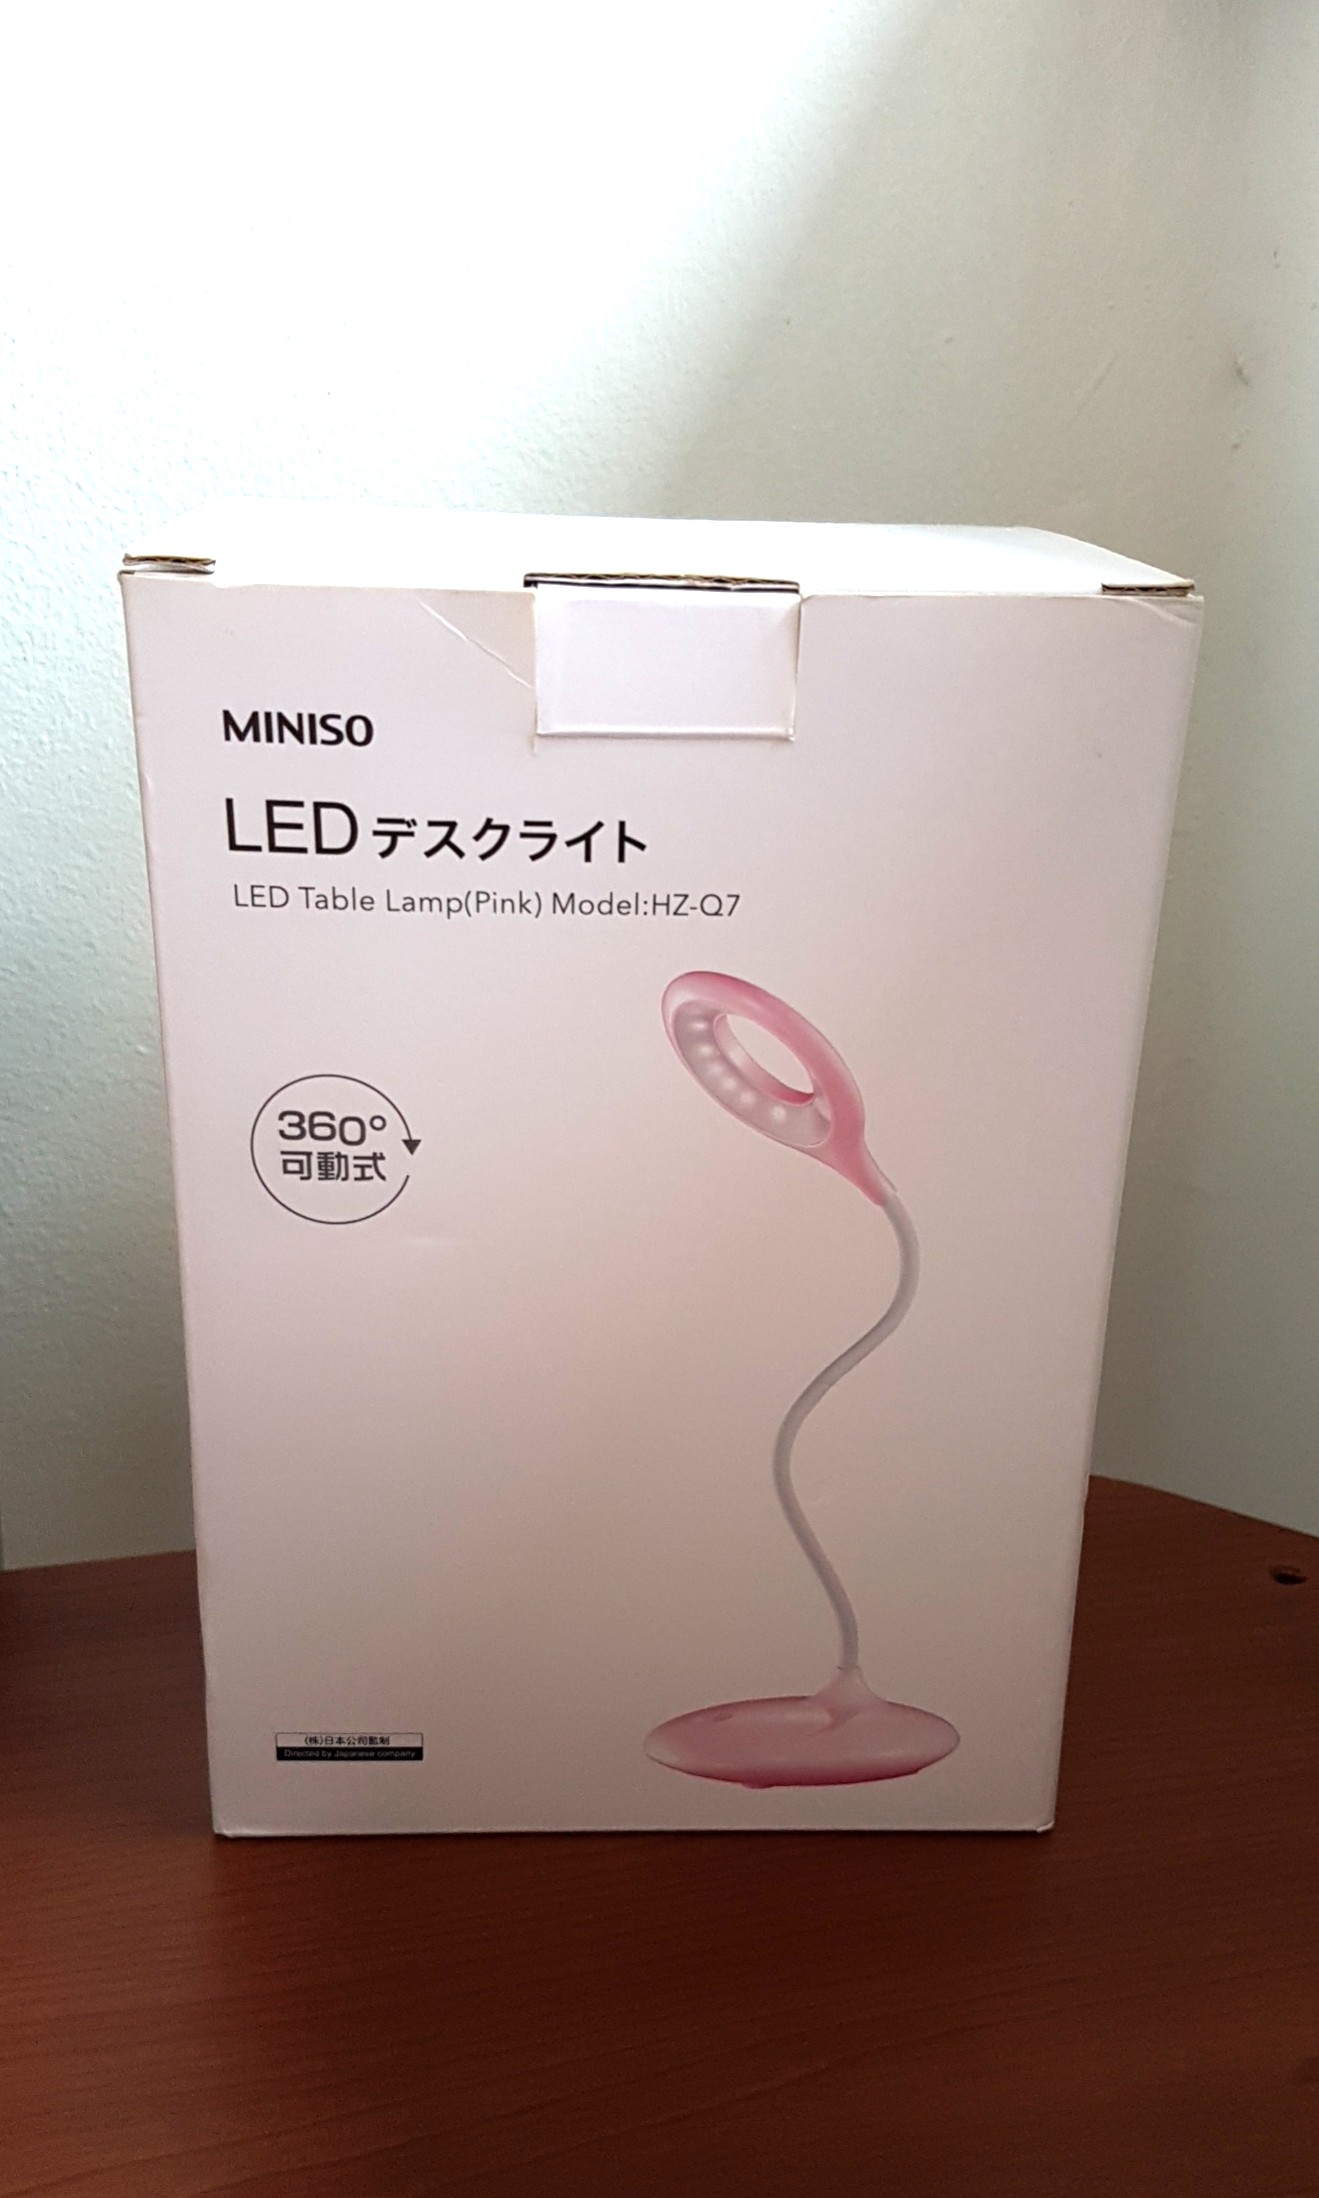 Miniso Desk Lamp Review | Desk Lamps